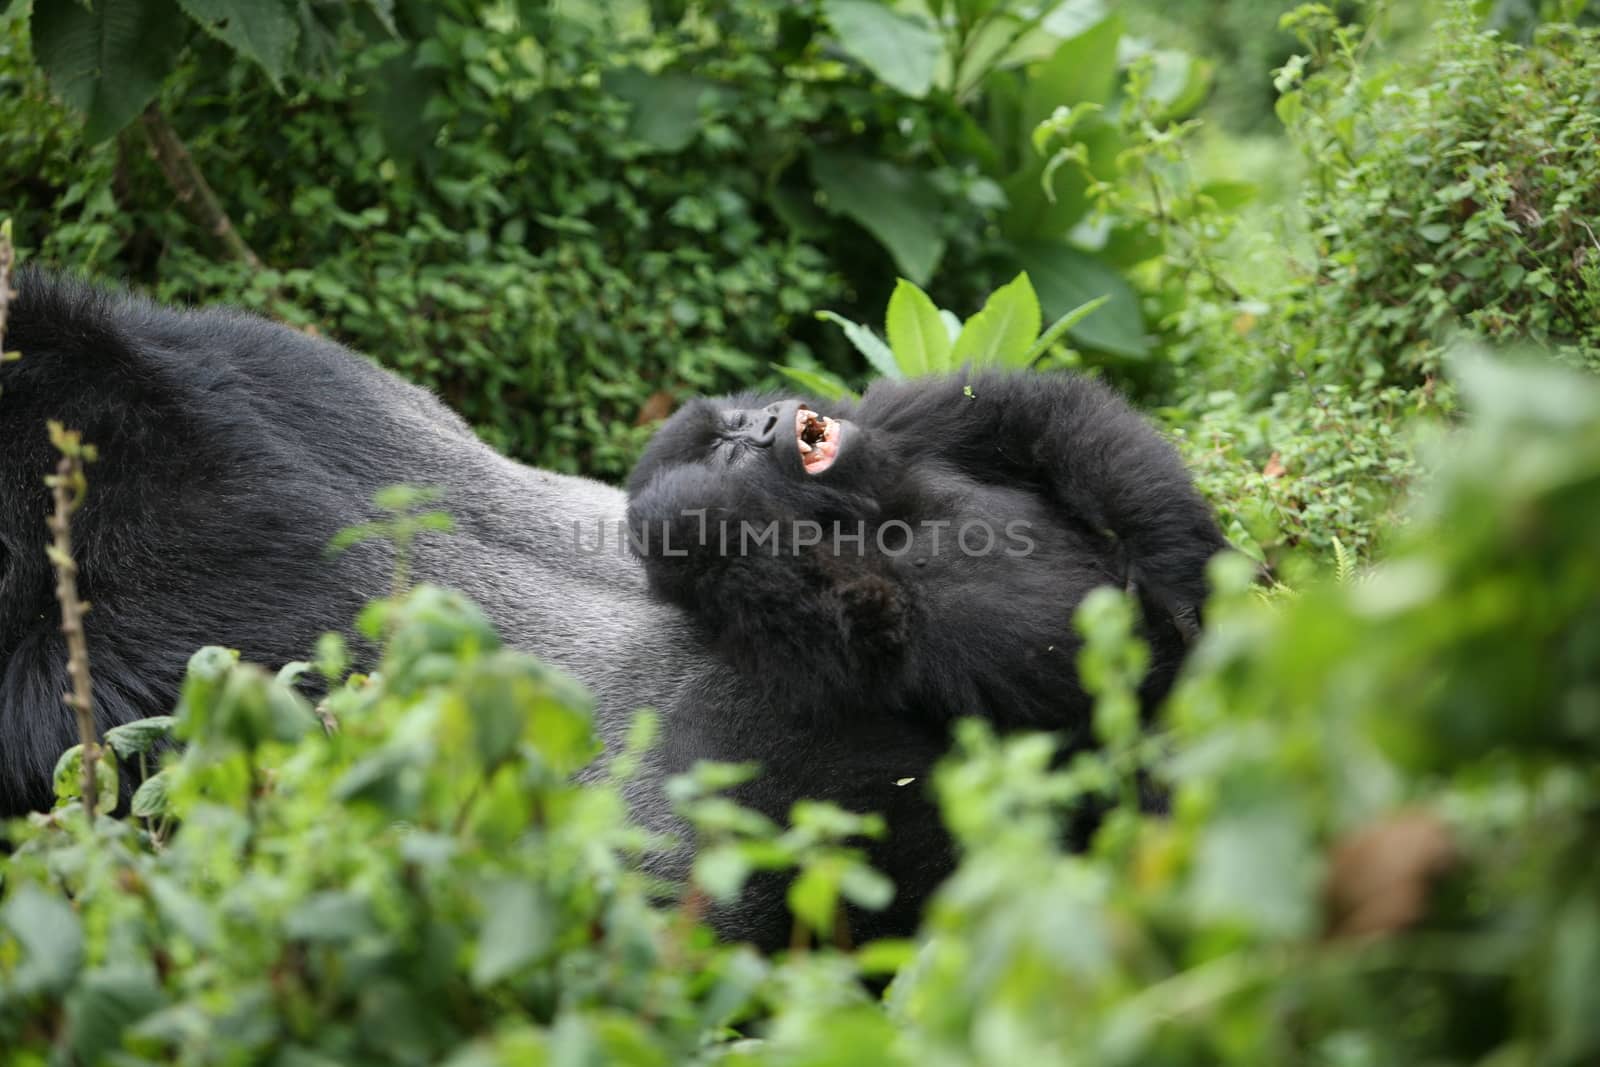 Wild Gorilla animal Rwanda Africa tropical Forest by desant7474